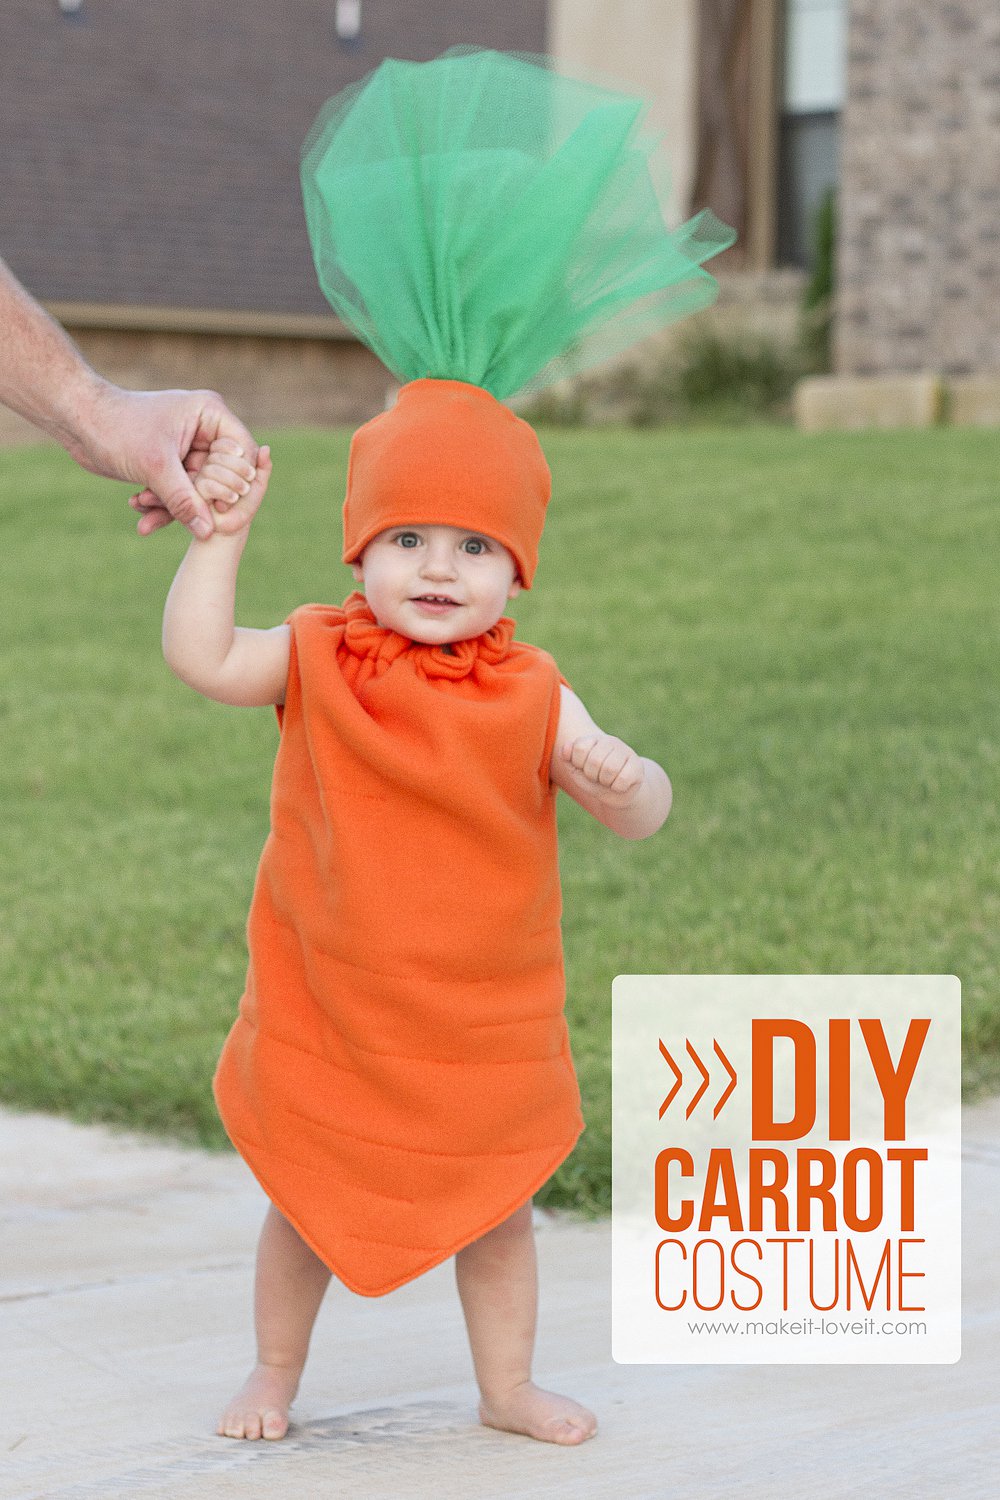 Diy carrot costume